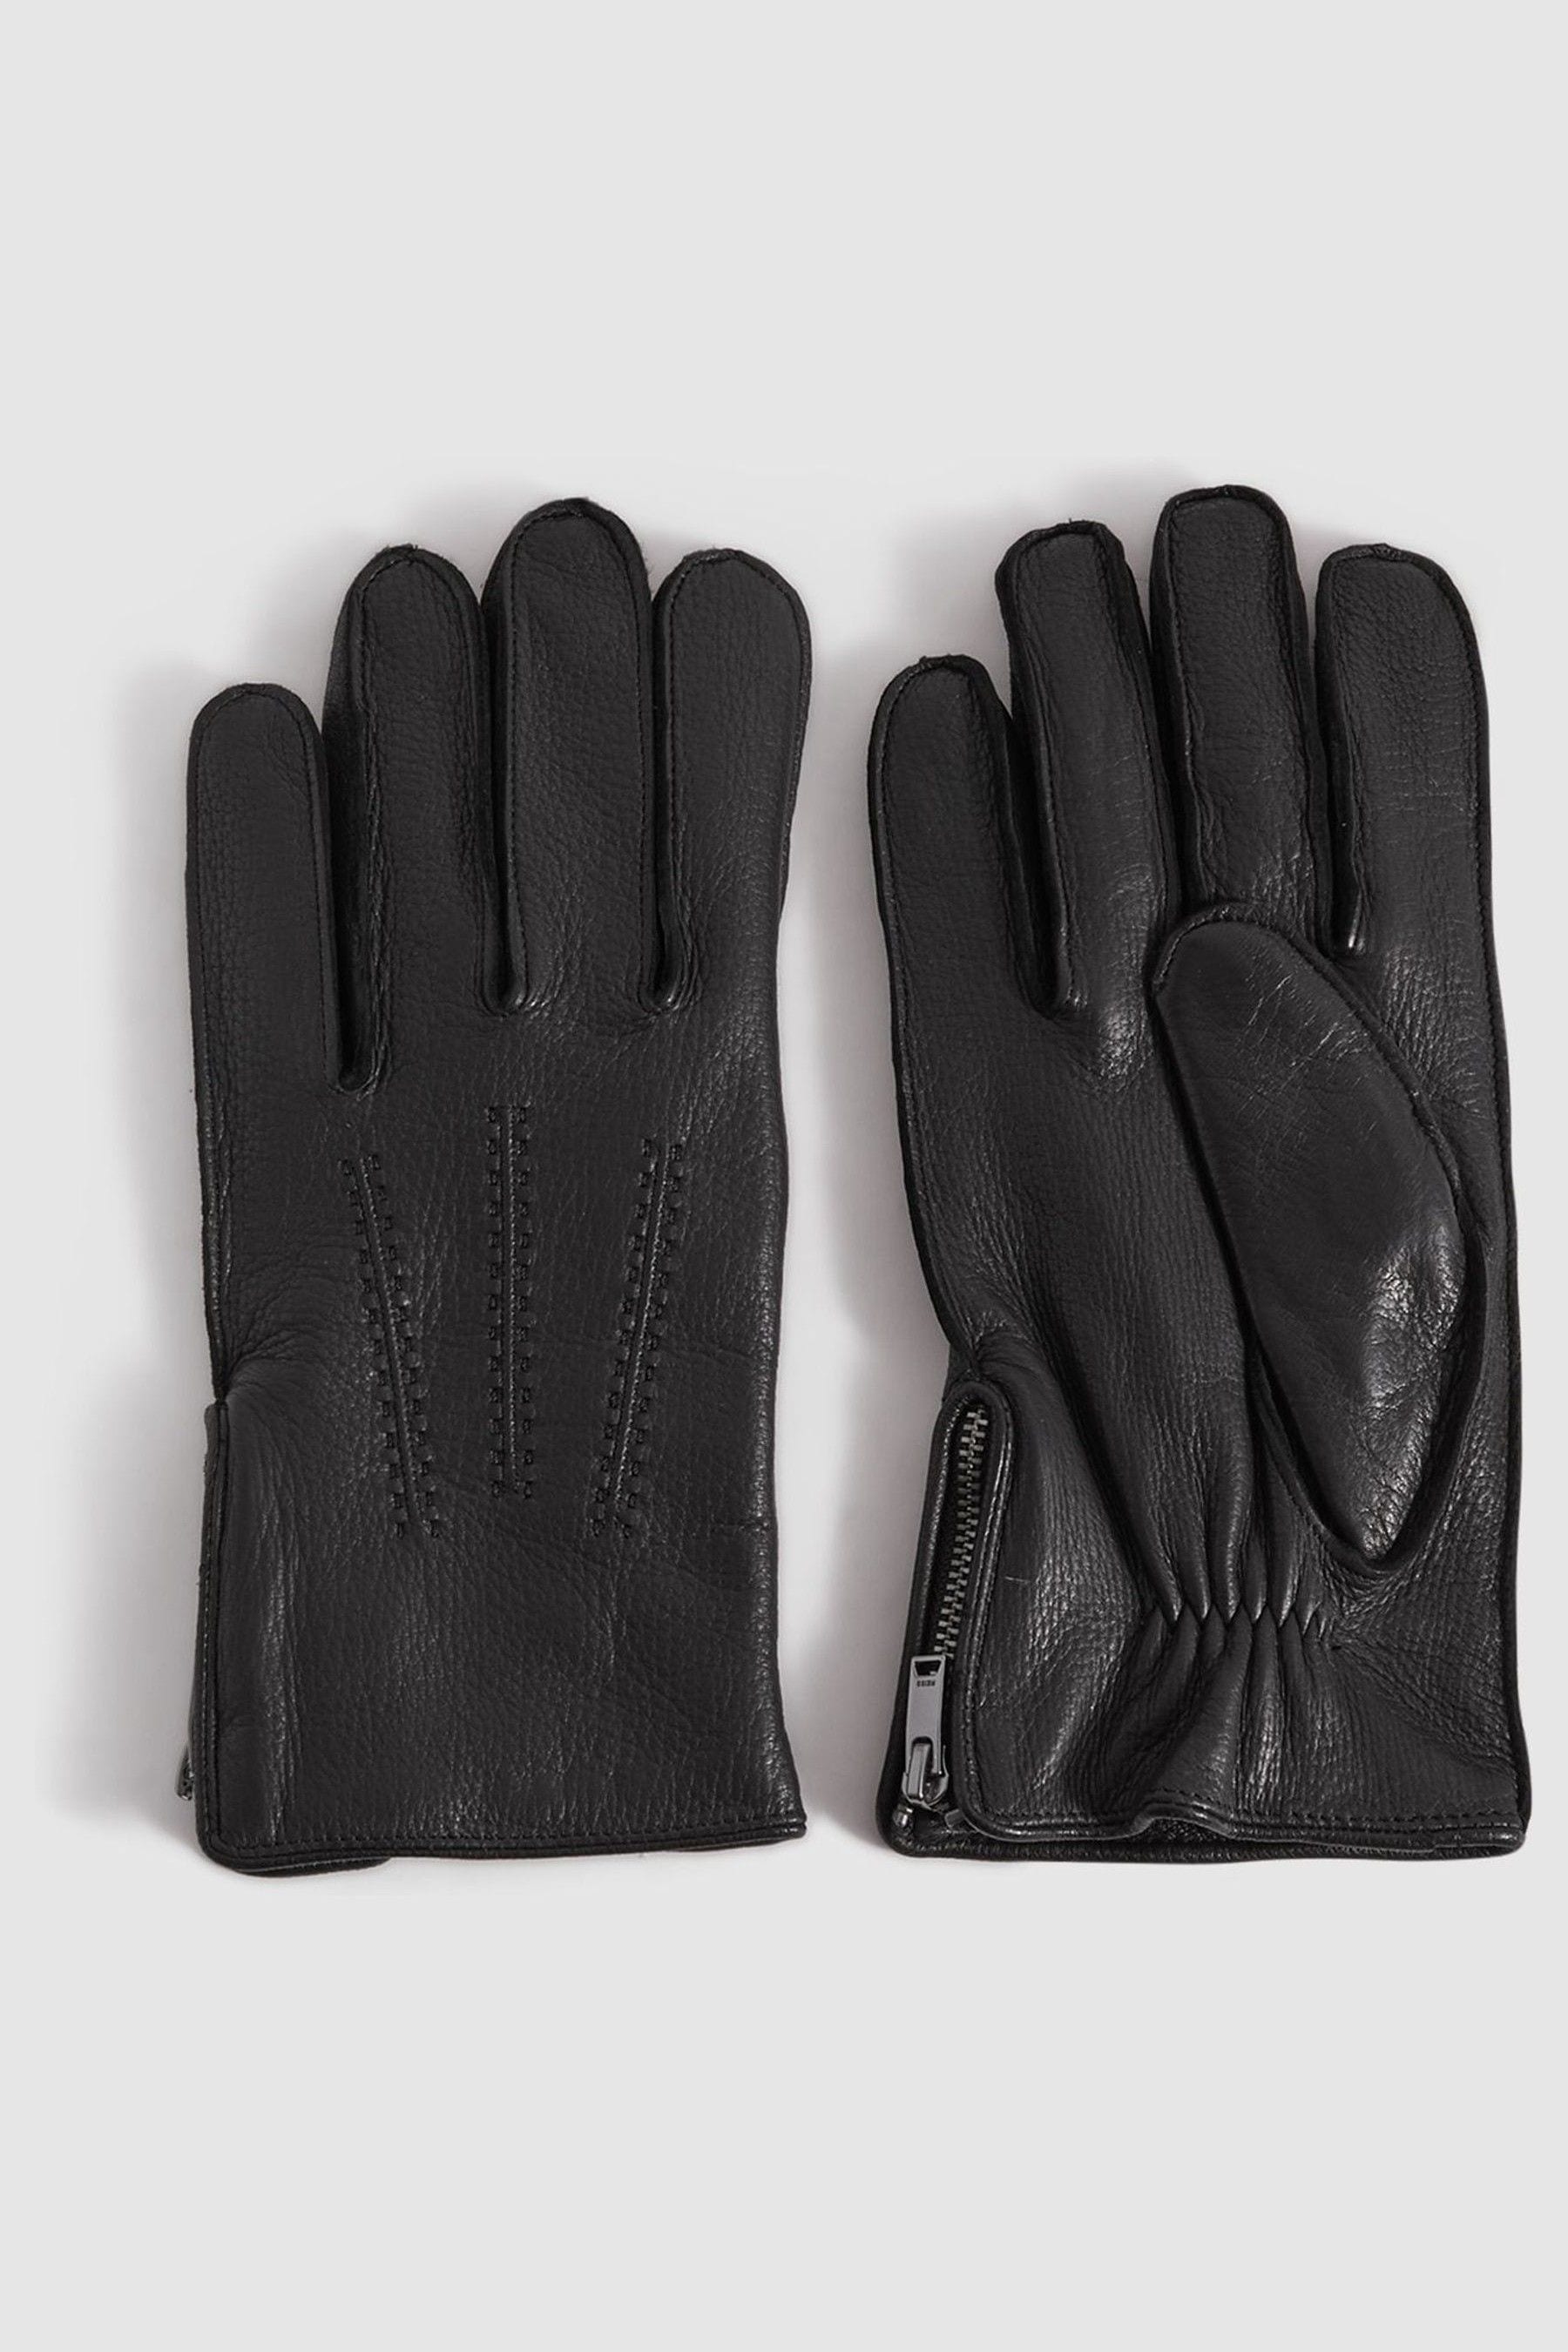 Reiss Iowa - Black Leather Gloves, M